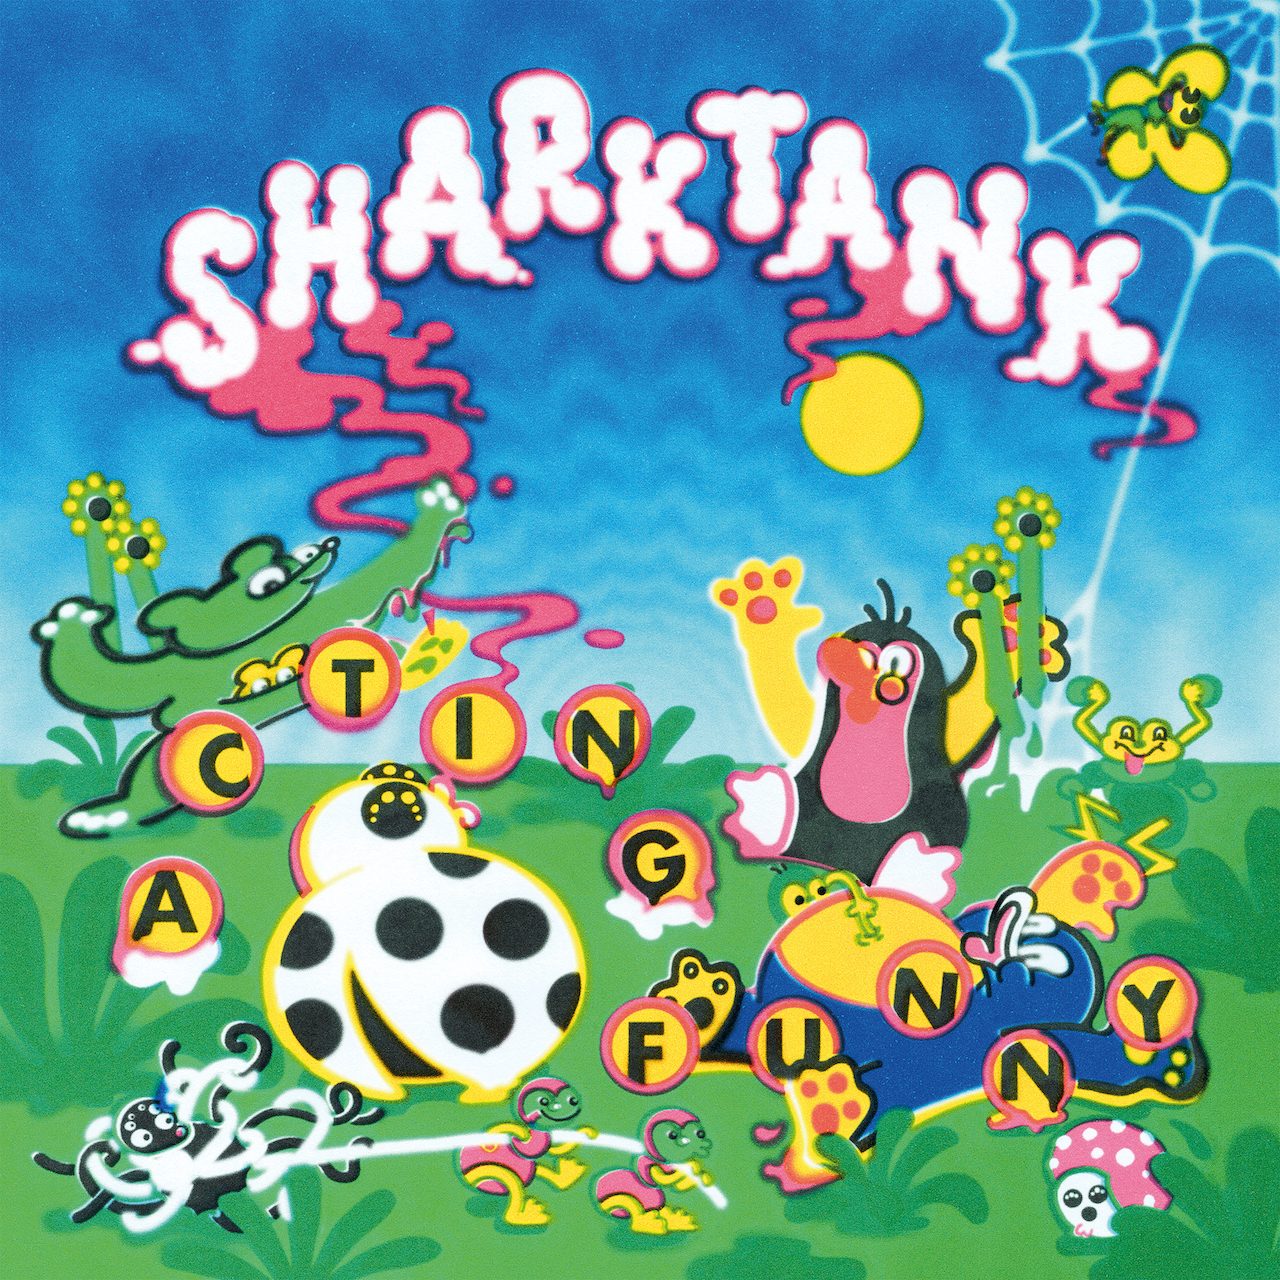 Sharktank 2. Album Acting Funny Comic Cover